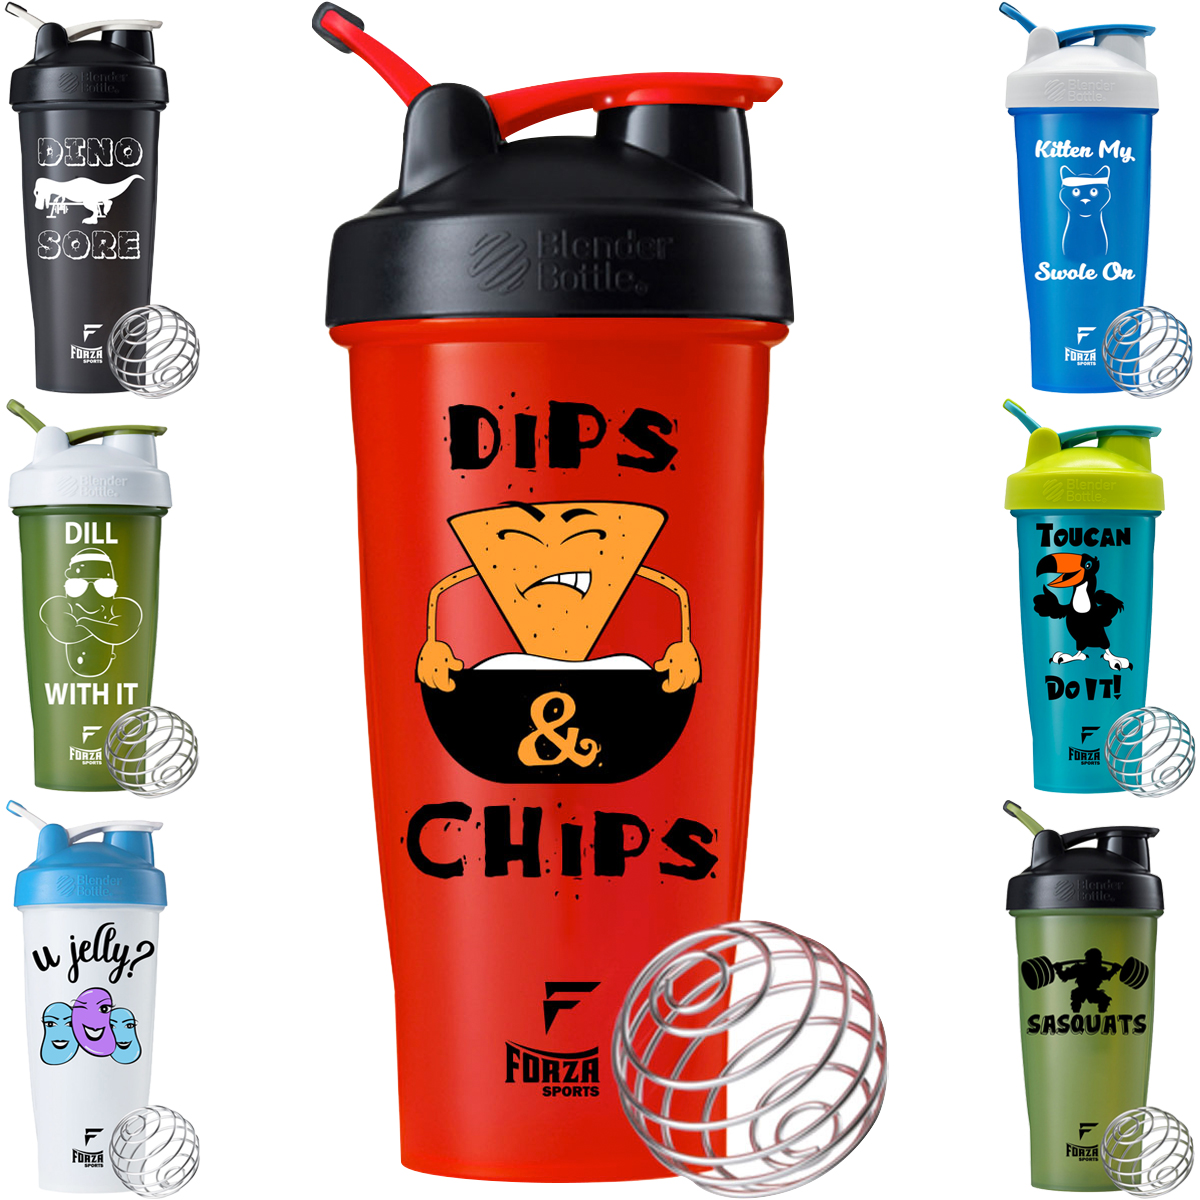 Blender Bottle x Forza Sports 28 oz. Classic Shaker - Chips & Dips - image 1 of 3